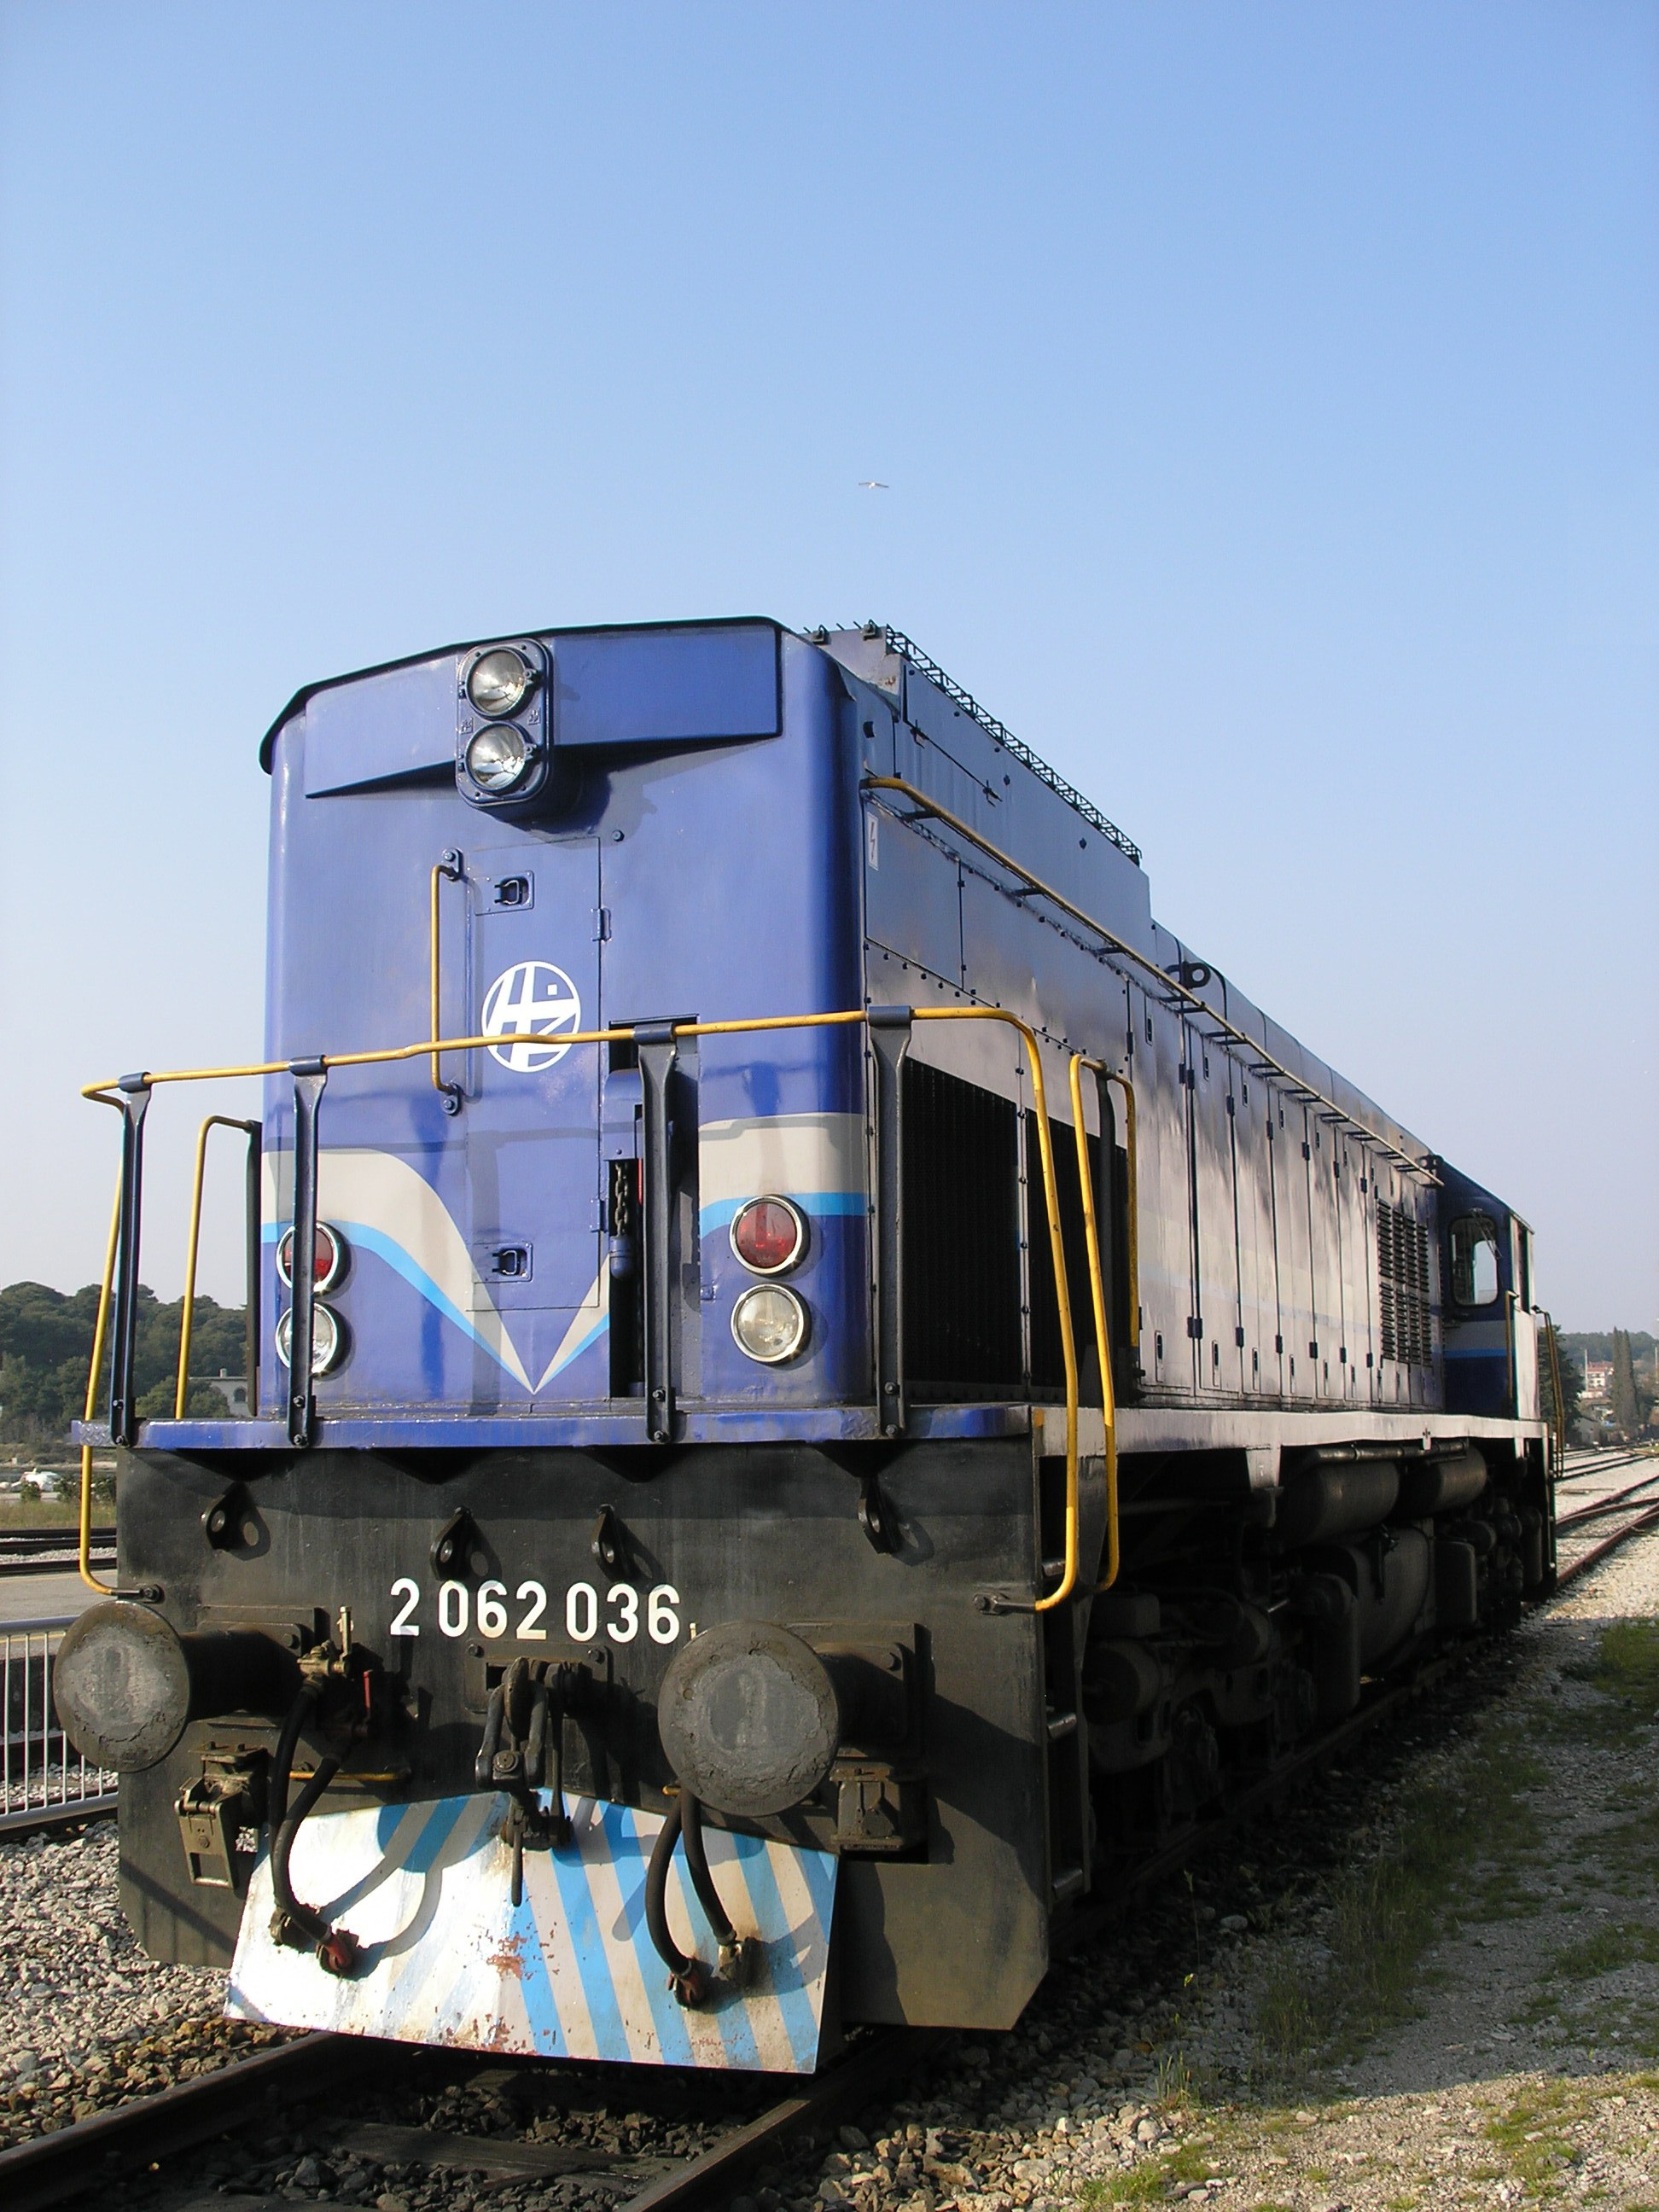 2062 036 locomotive (5)